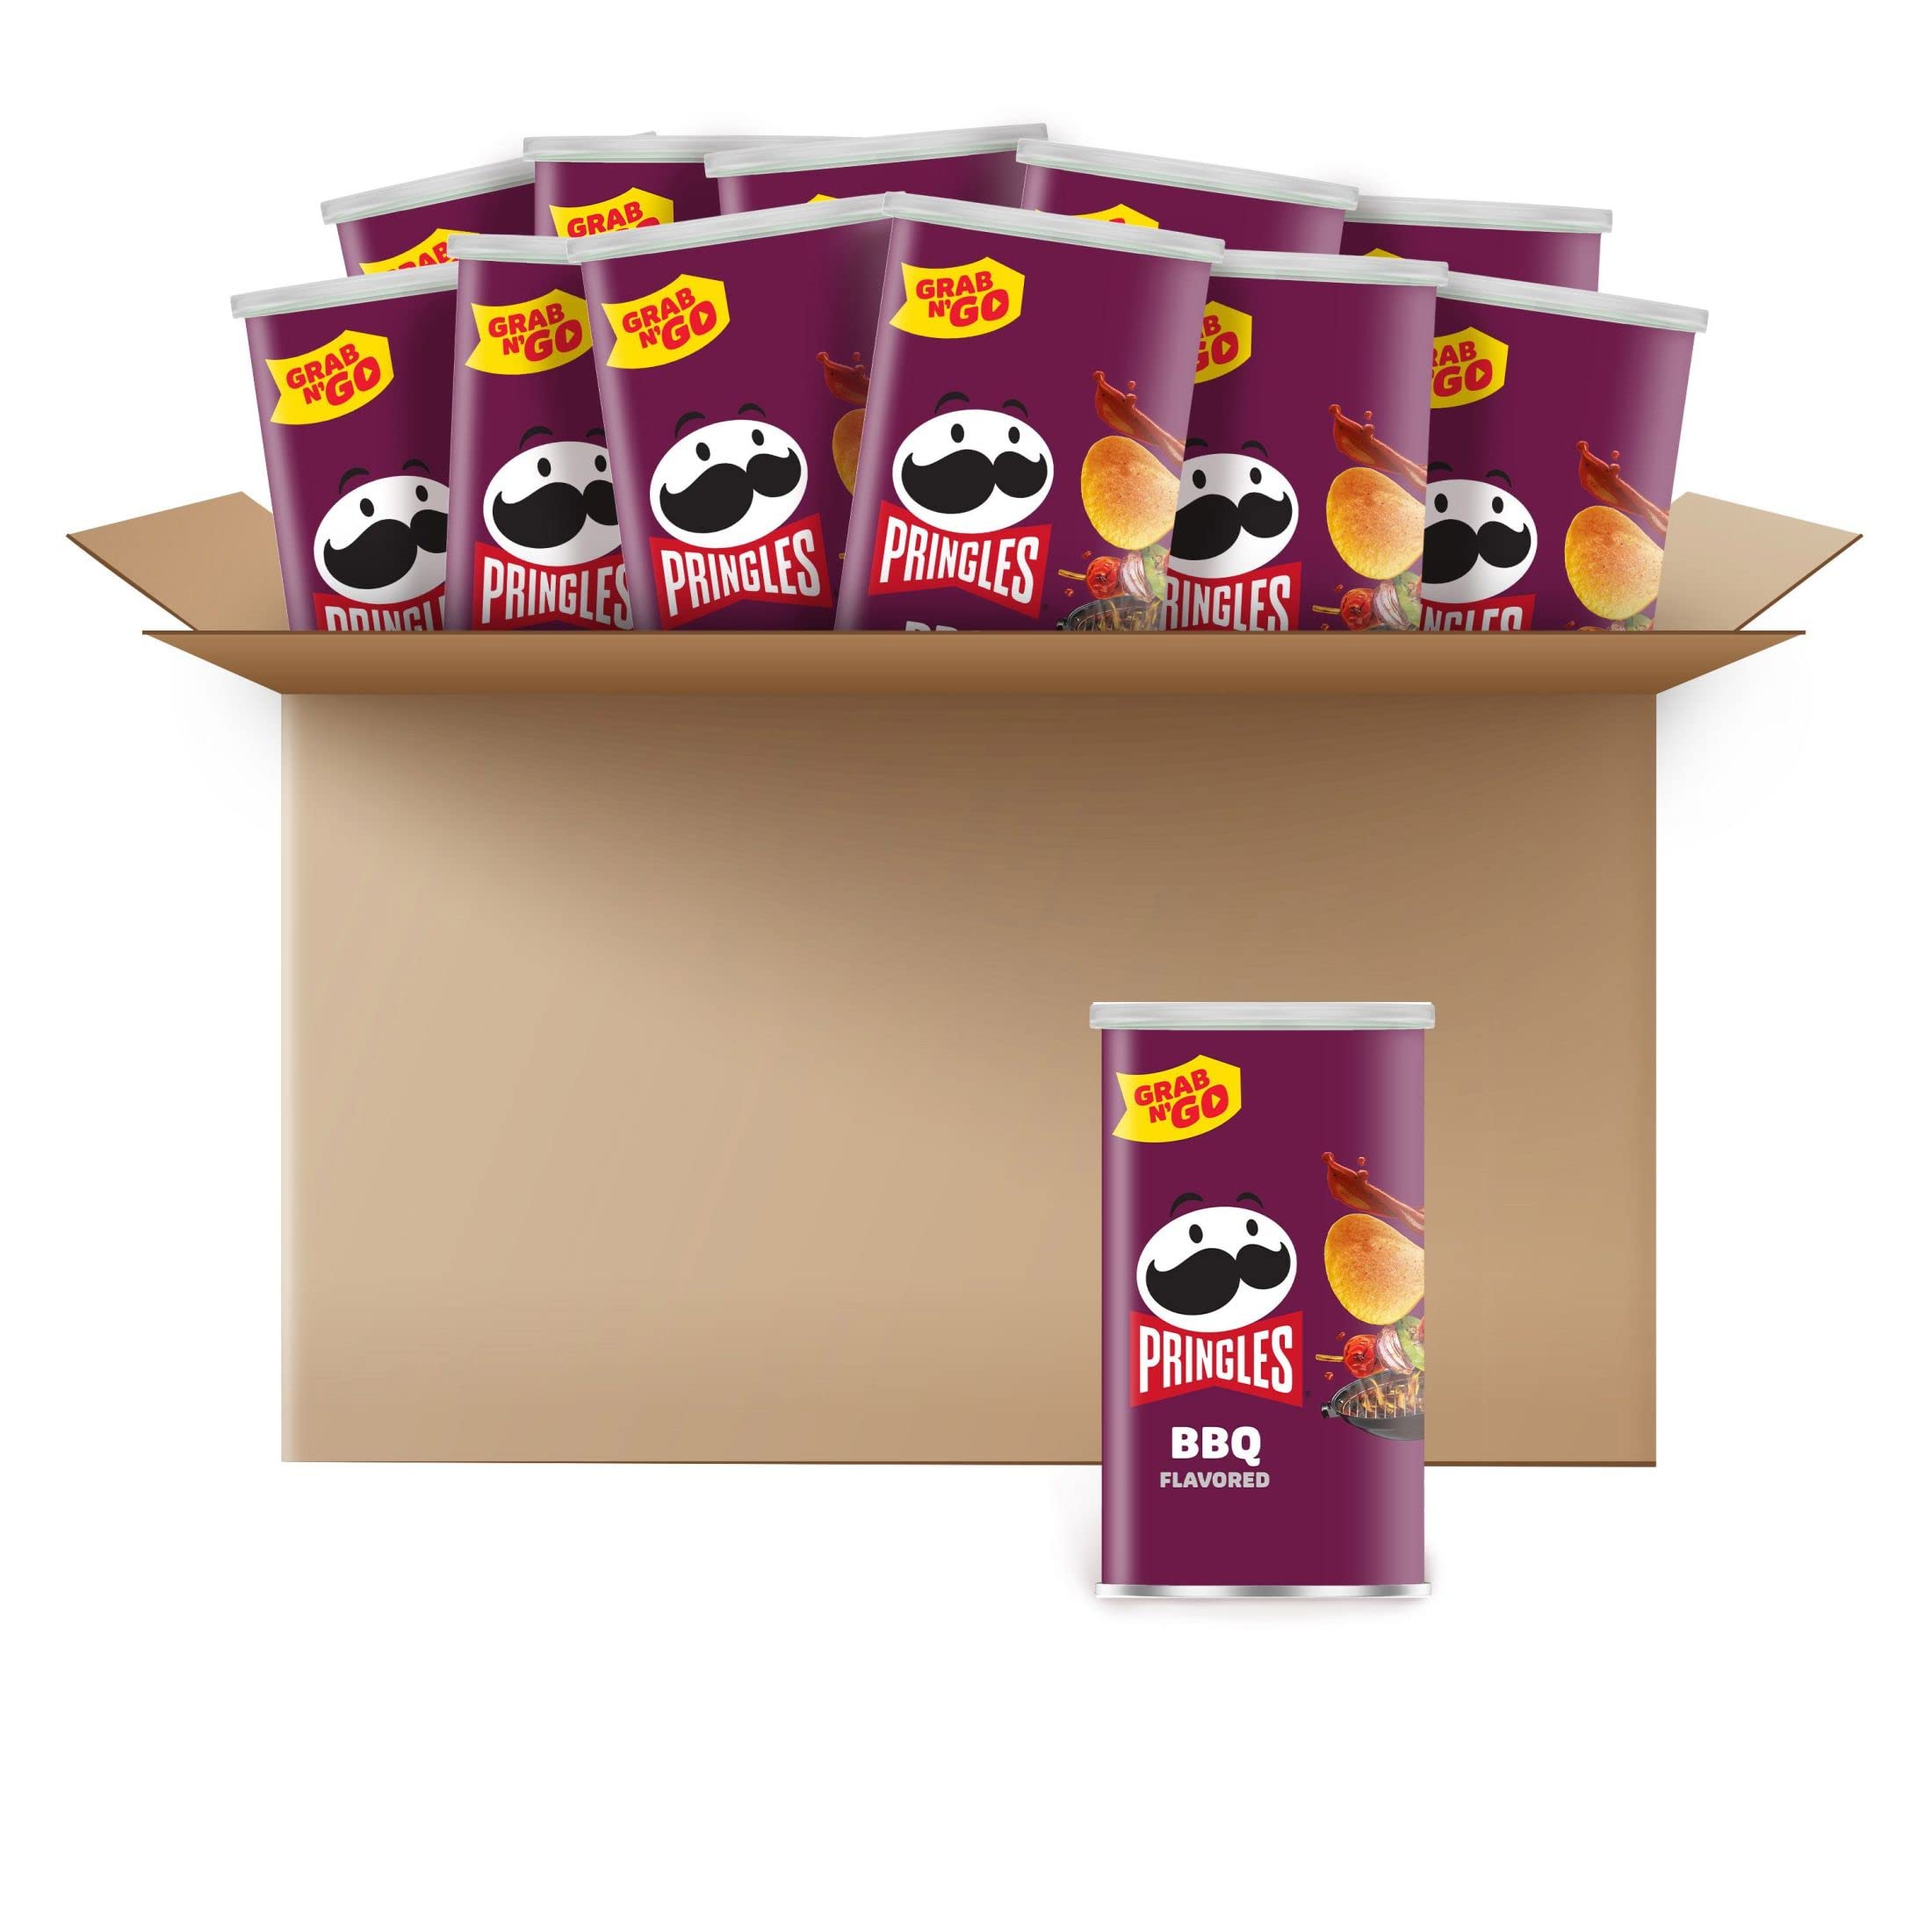 12-Pack 2.5-Oz. Pringles Grab N' Go Potato Crisps Chips​ (BBQ) $8.93 w/ S&S + Free Shipping w/ Prime or on $35+